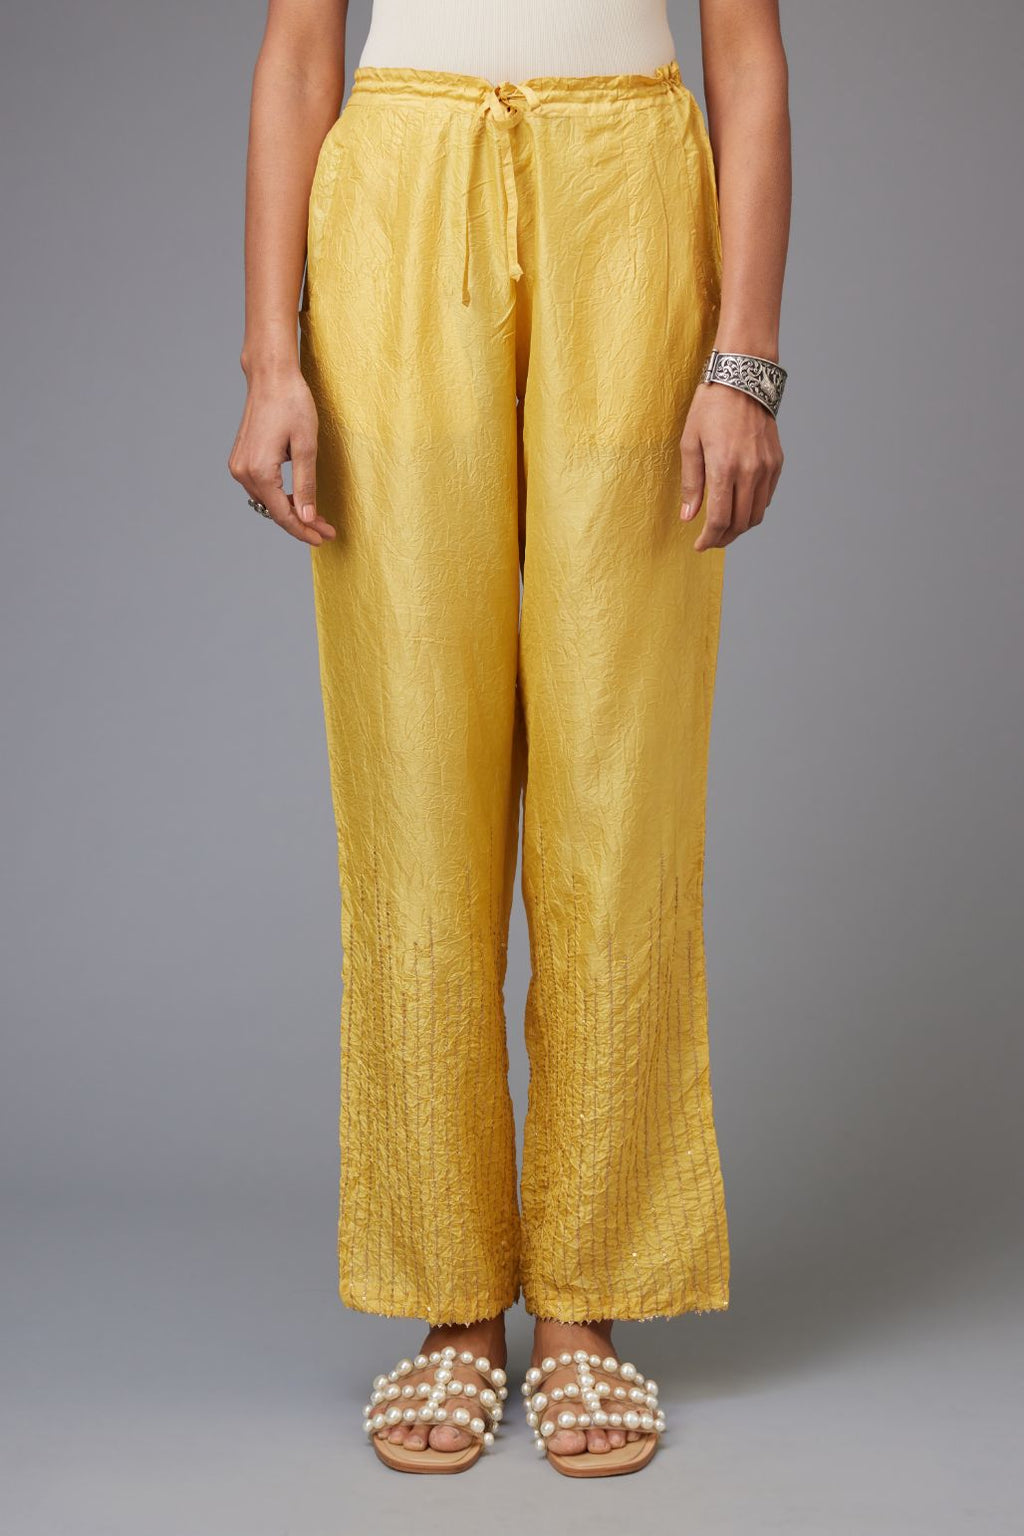 Yellow Sequin Flare Leg Pants | Pants | PrettyLittleThing USA